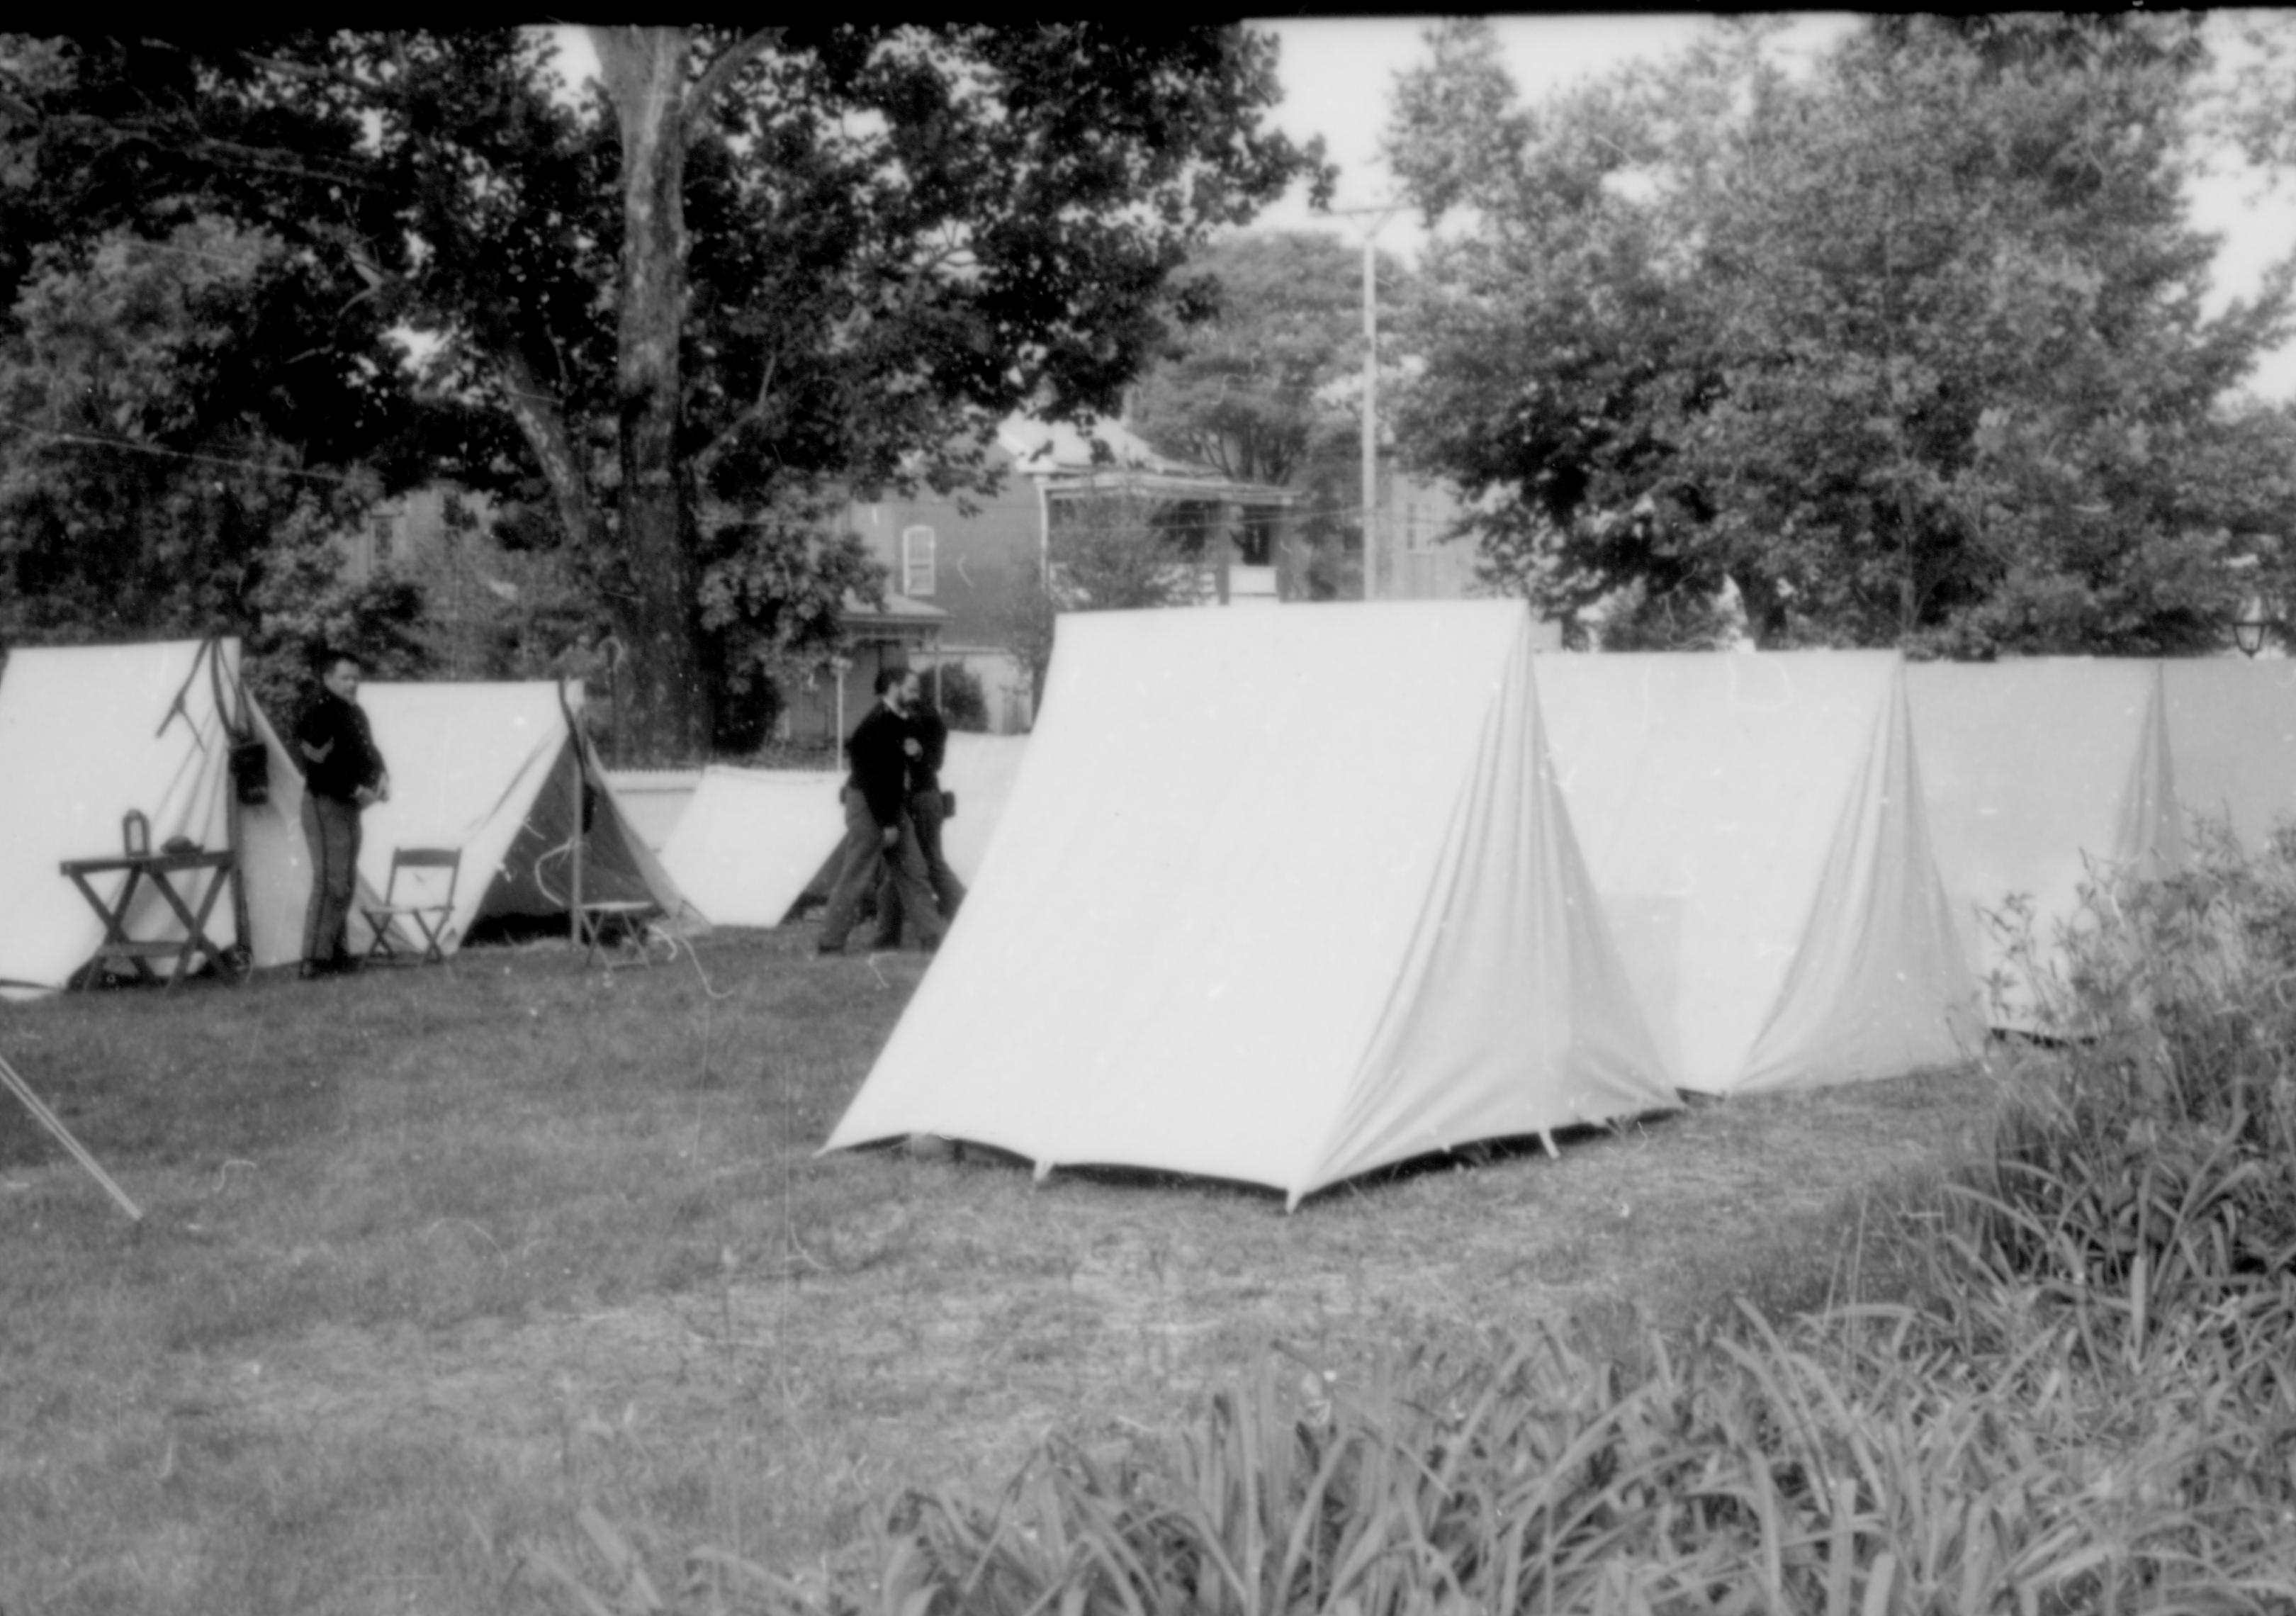 NA Lincoln Home NHS- Lincoln Festival, 146 Lincoln Festival, encampment